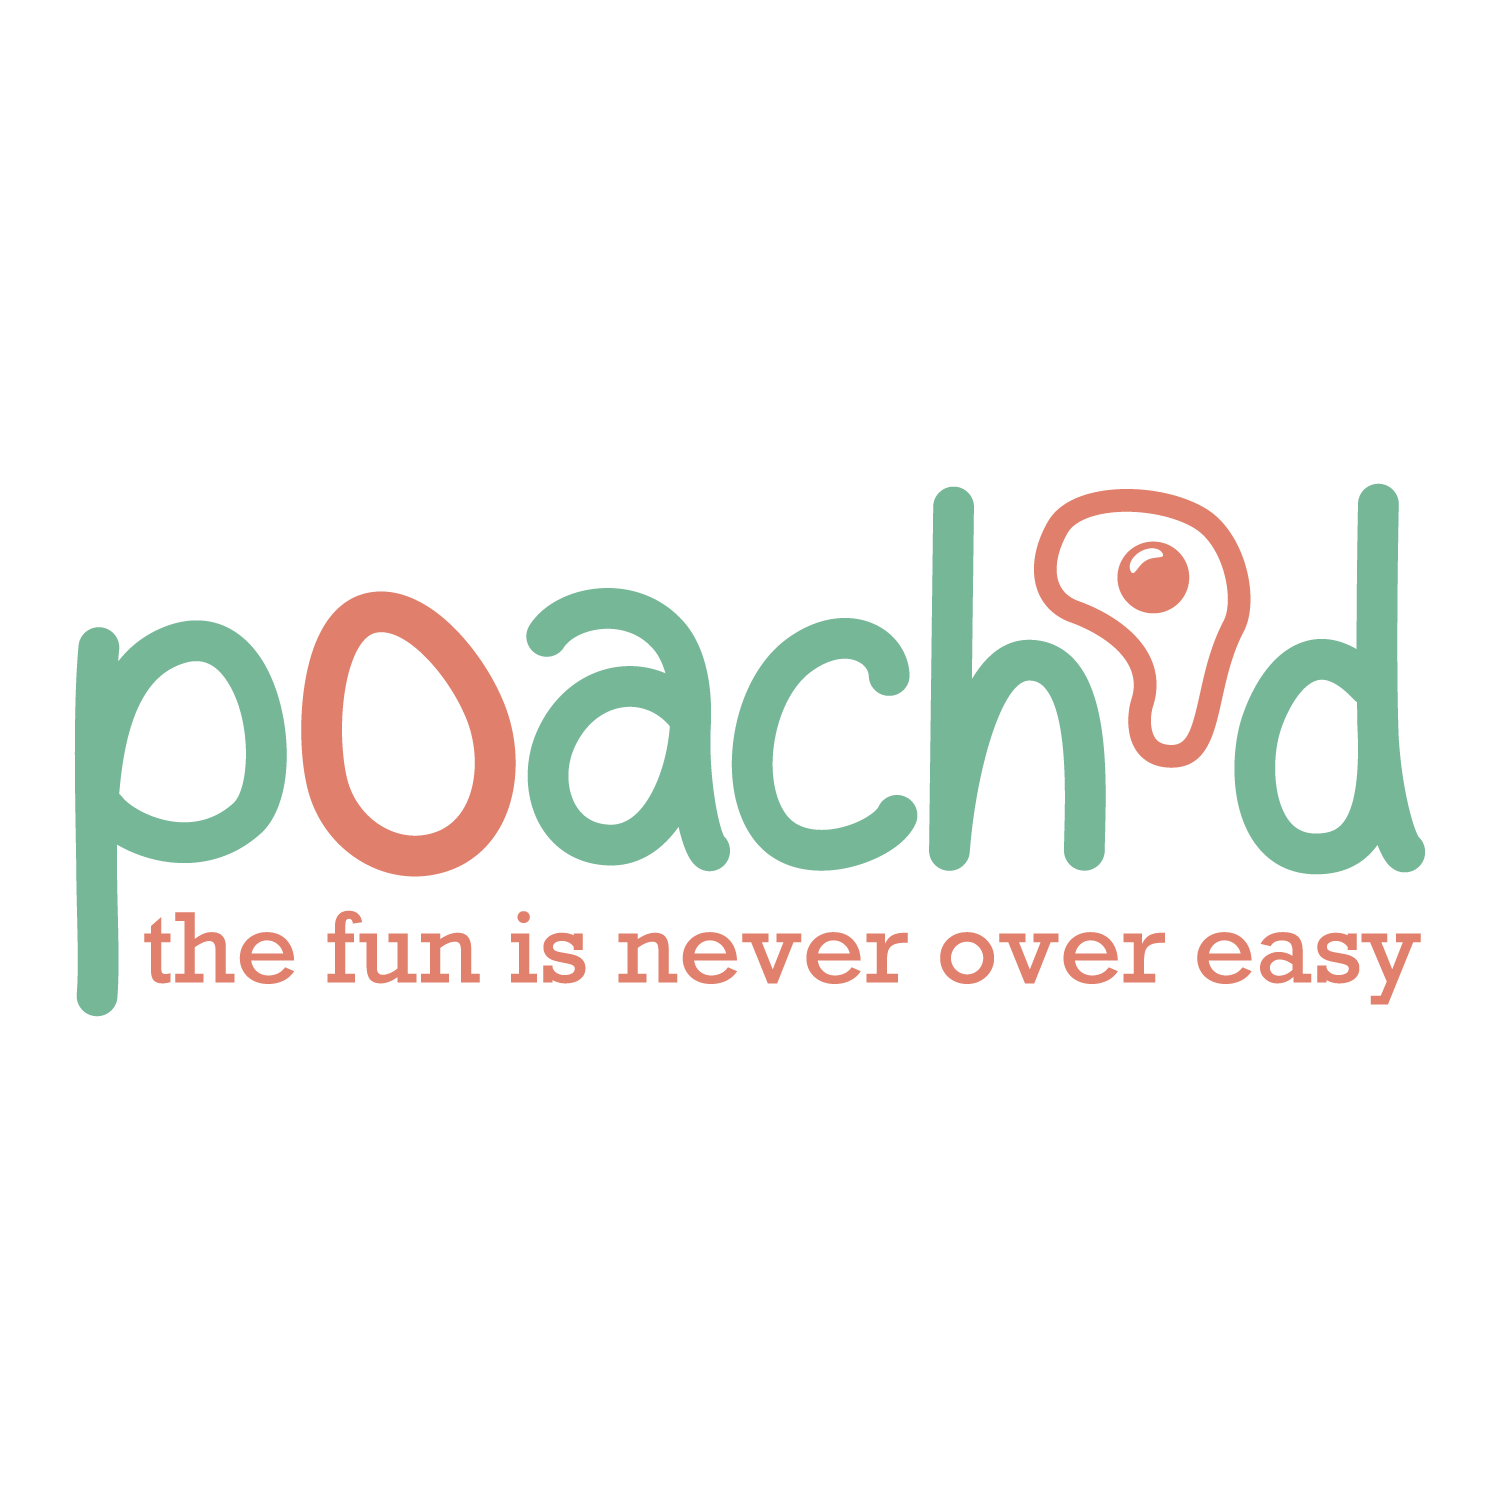 poach'd-01.png